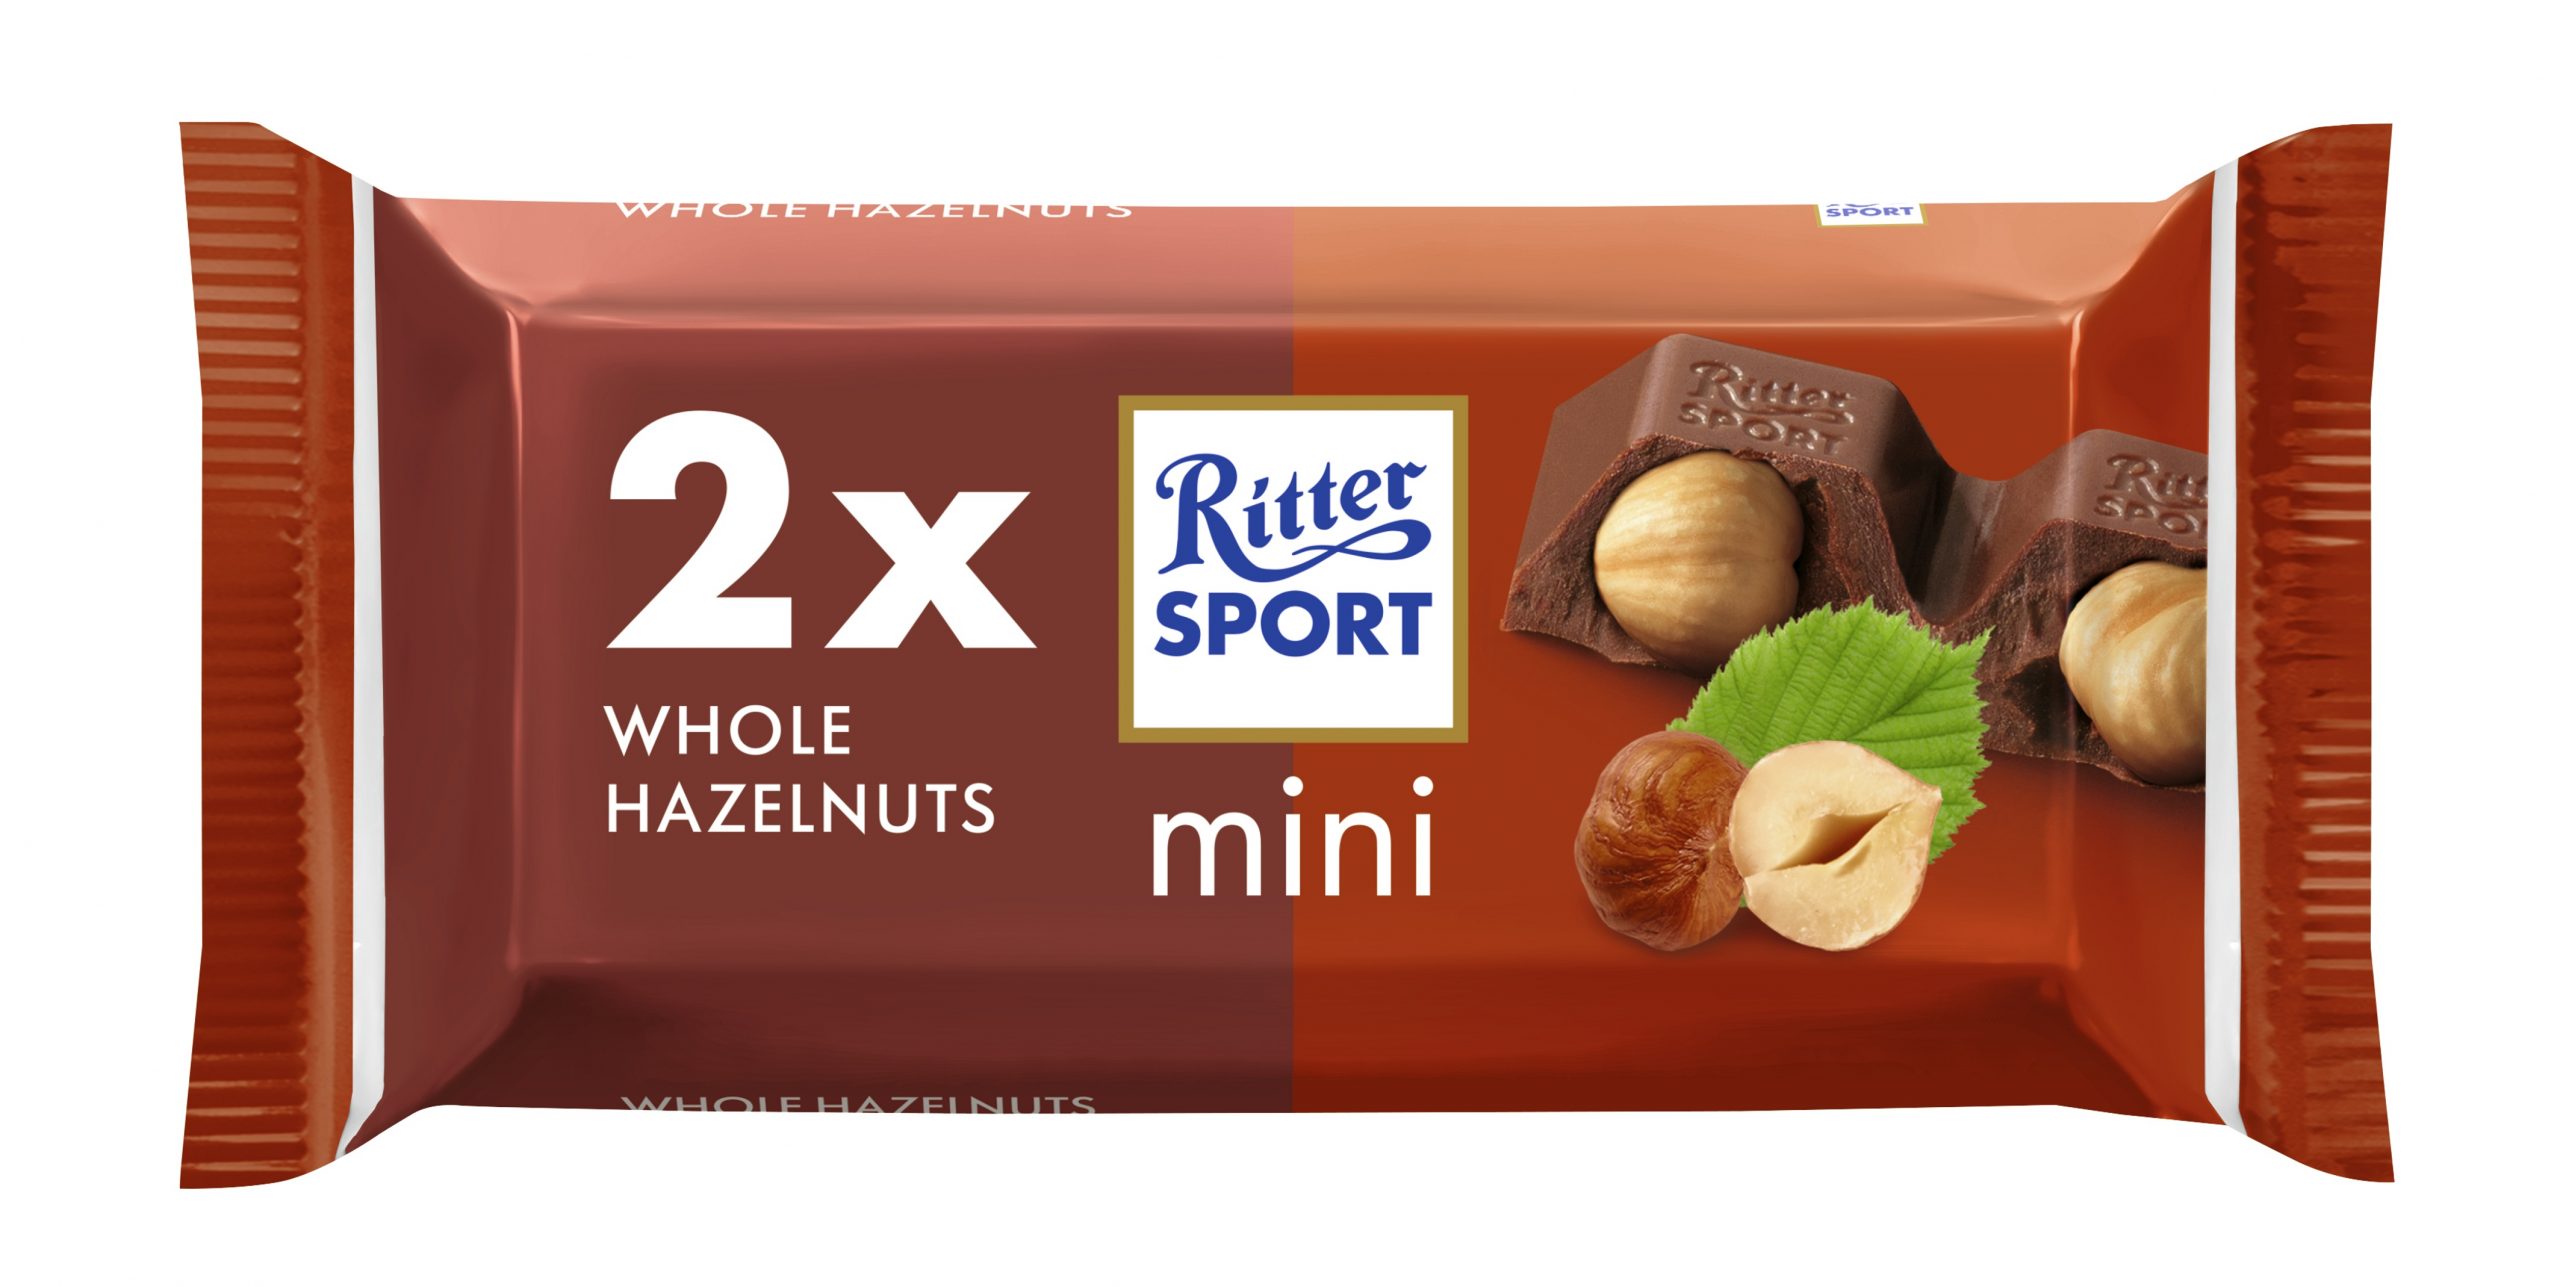 Ritter Sport releases new Mini impulse range for convenience channel